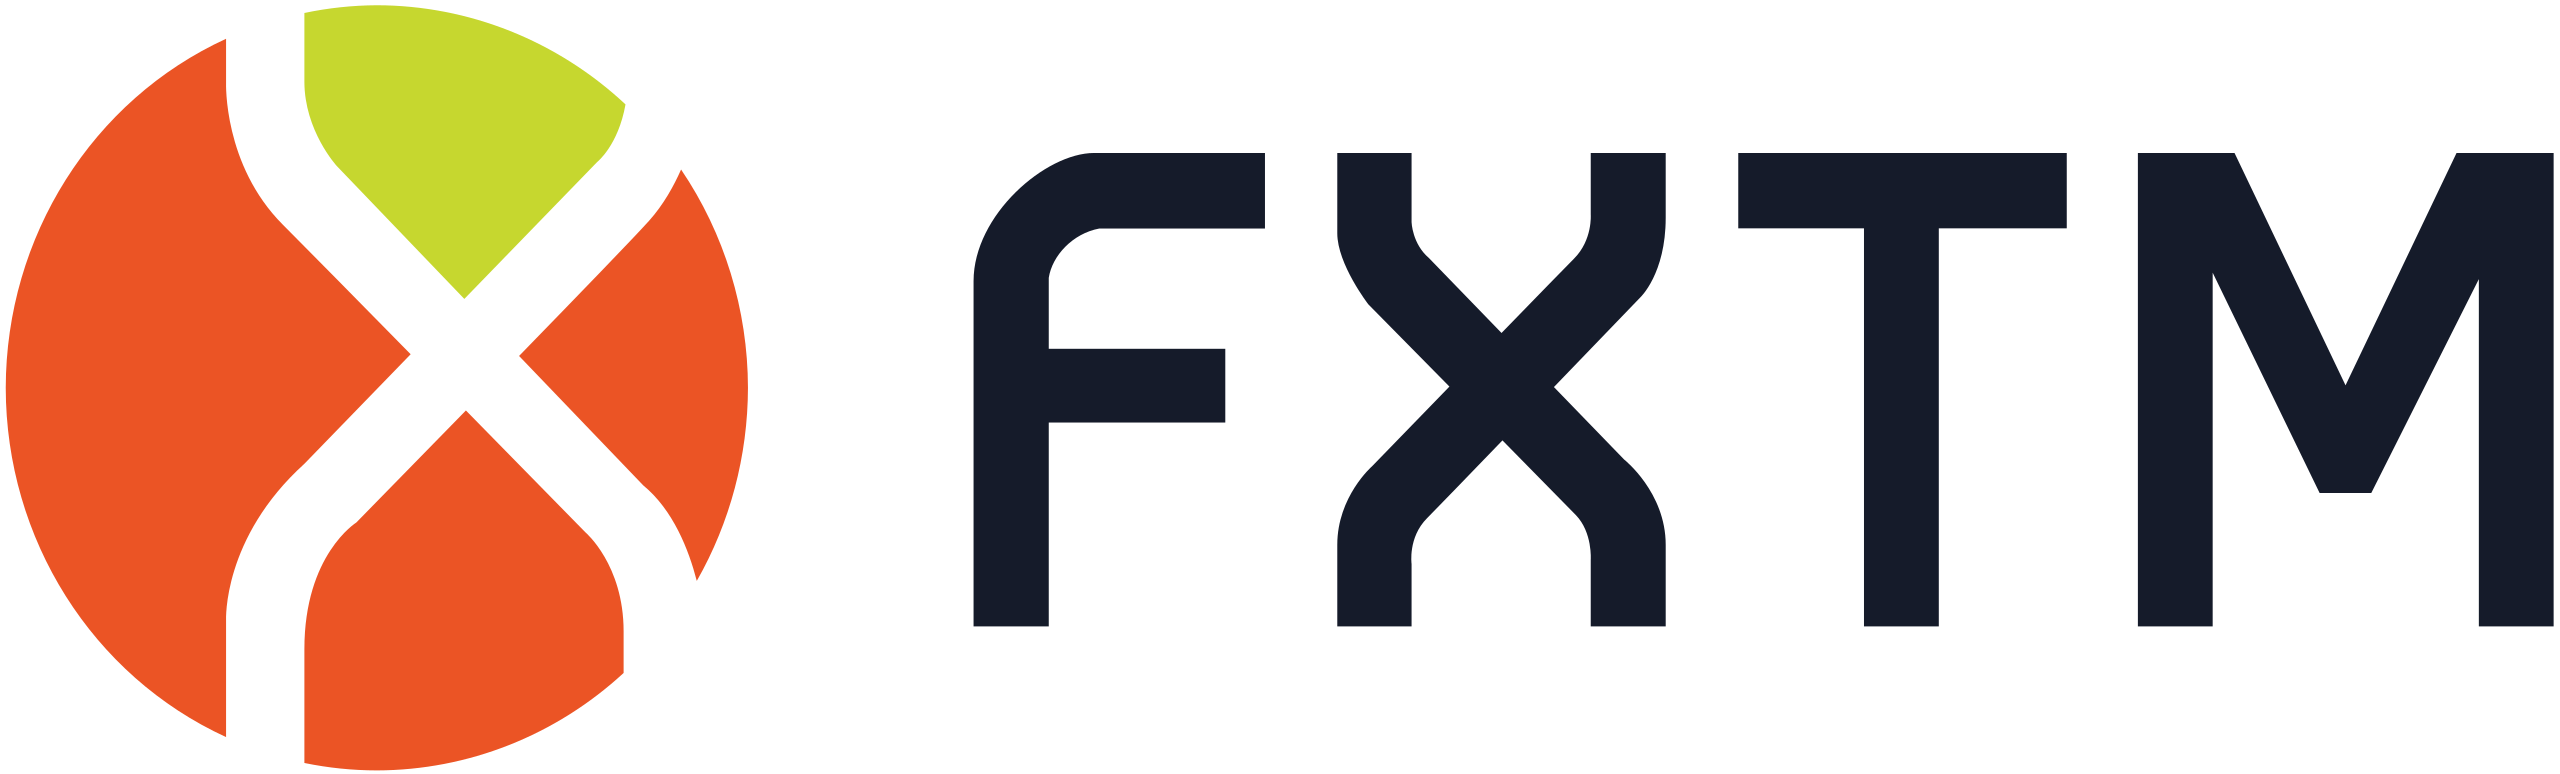 2560px FXTM logo.svg